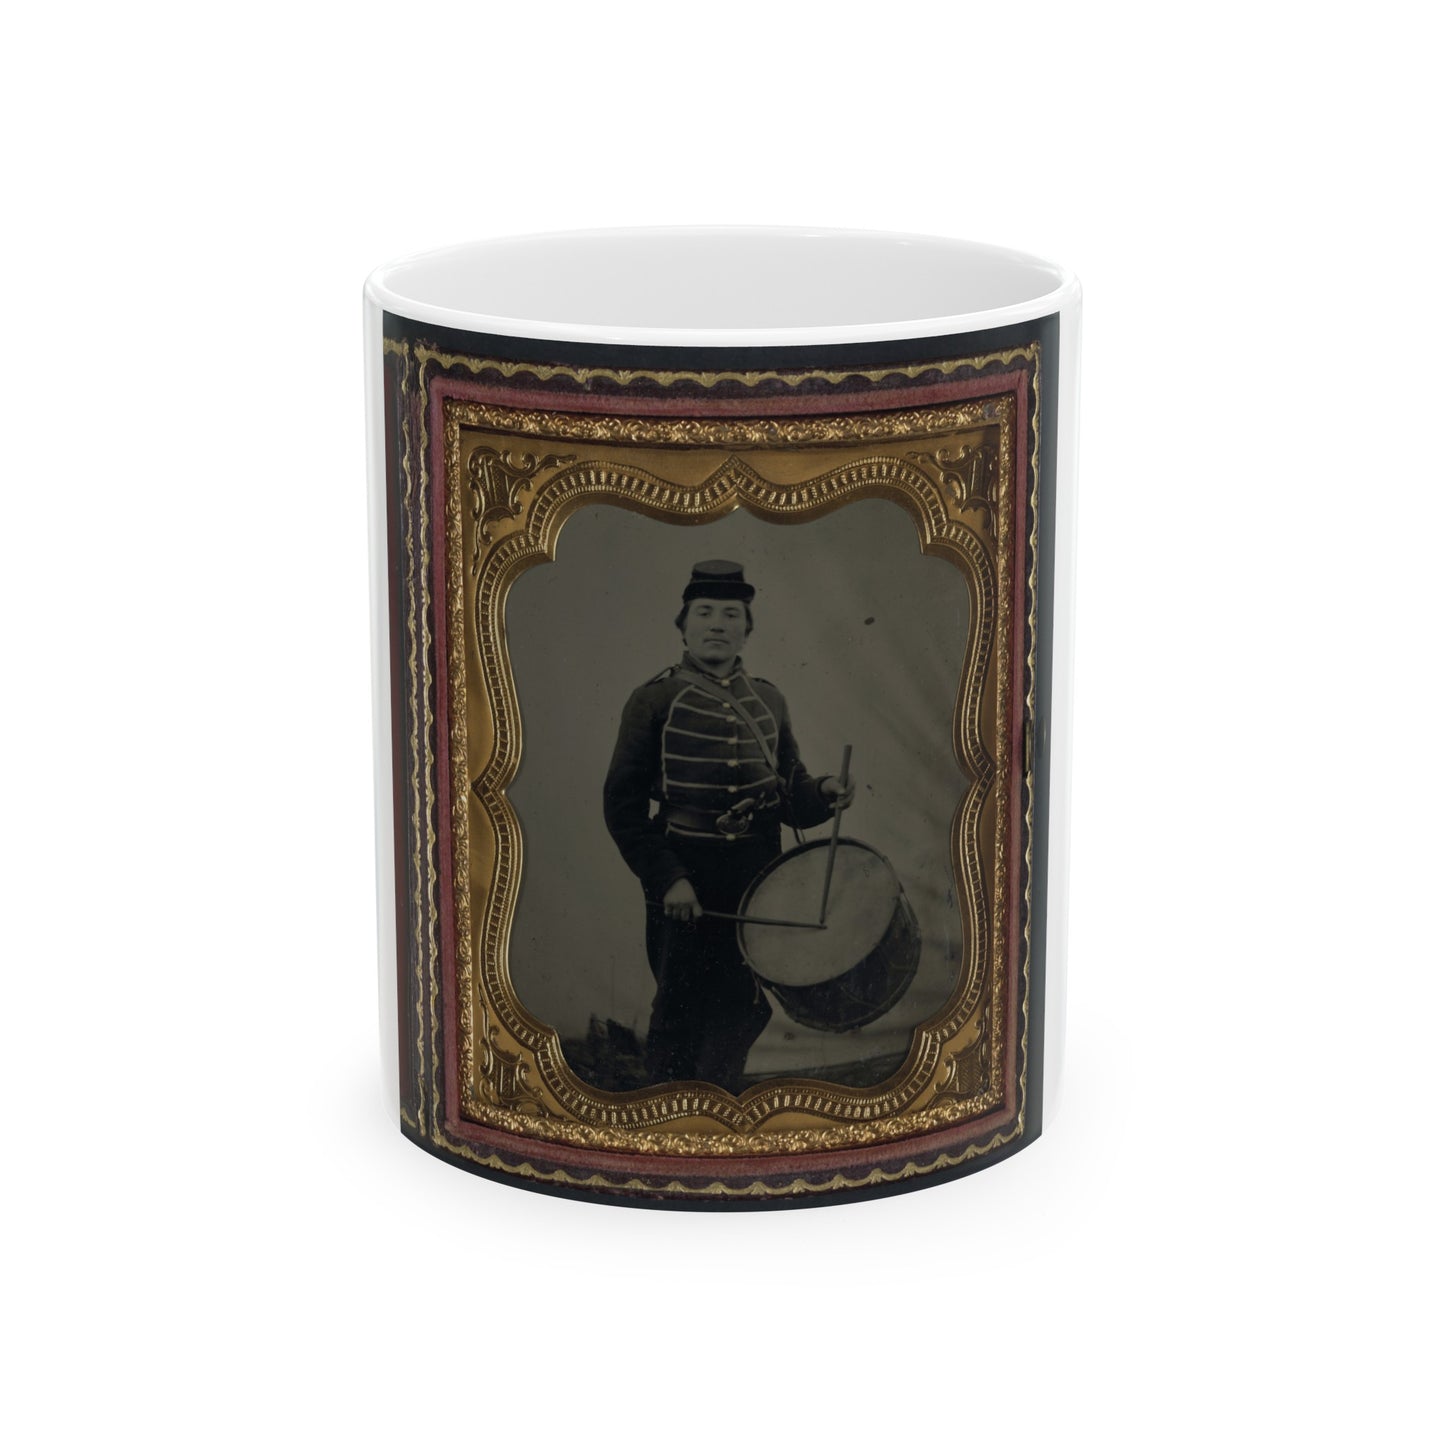 Private William V. Haines Of Company H, 49th Ohio Infantry Regiment, In Uniform And Ohio Volunteer Militia Belt Buckle With Drum (U.S. Civil War) White Coffee Mug